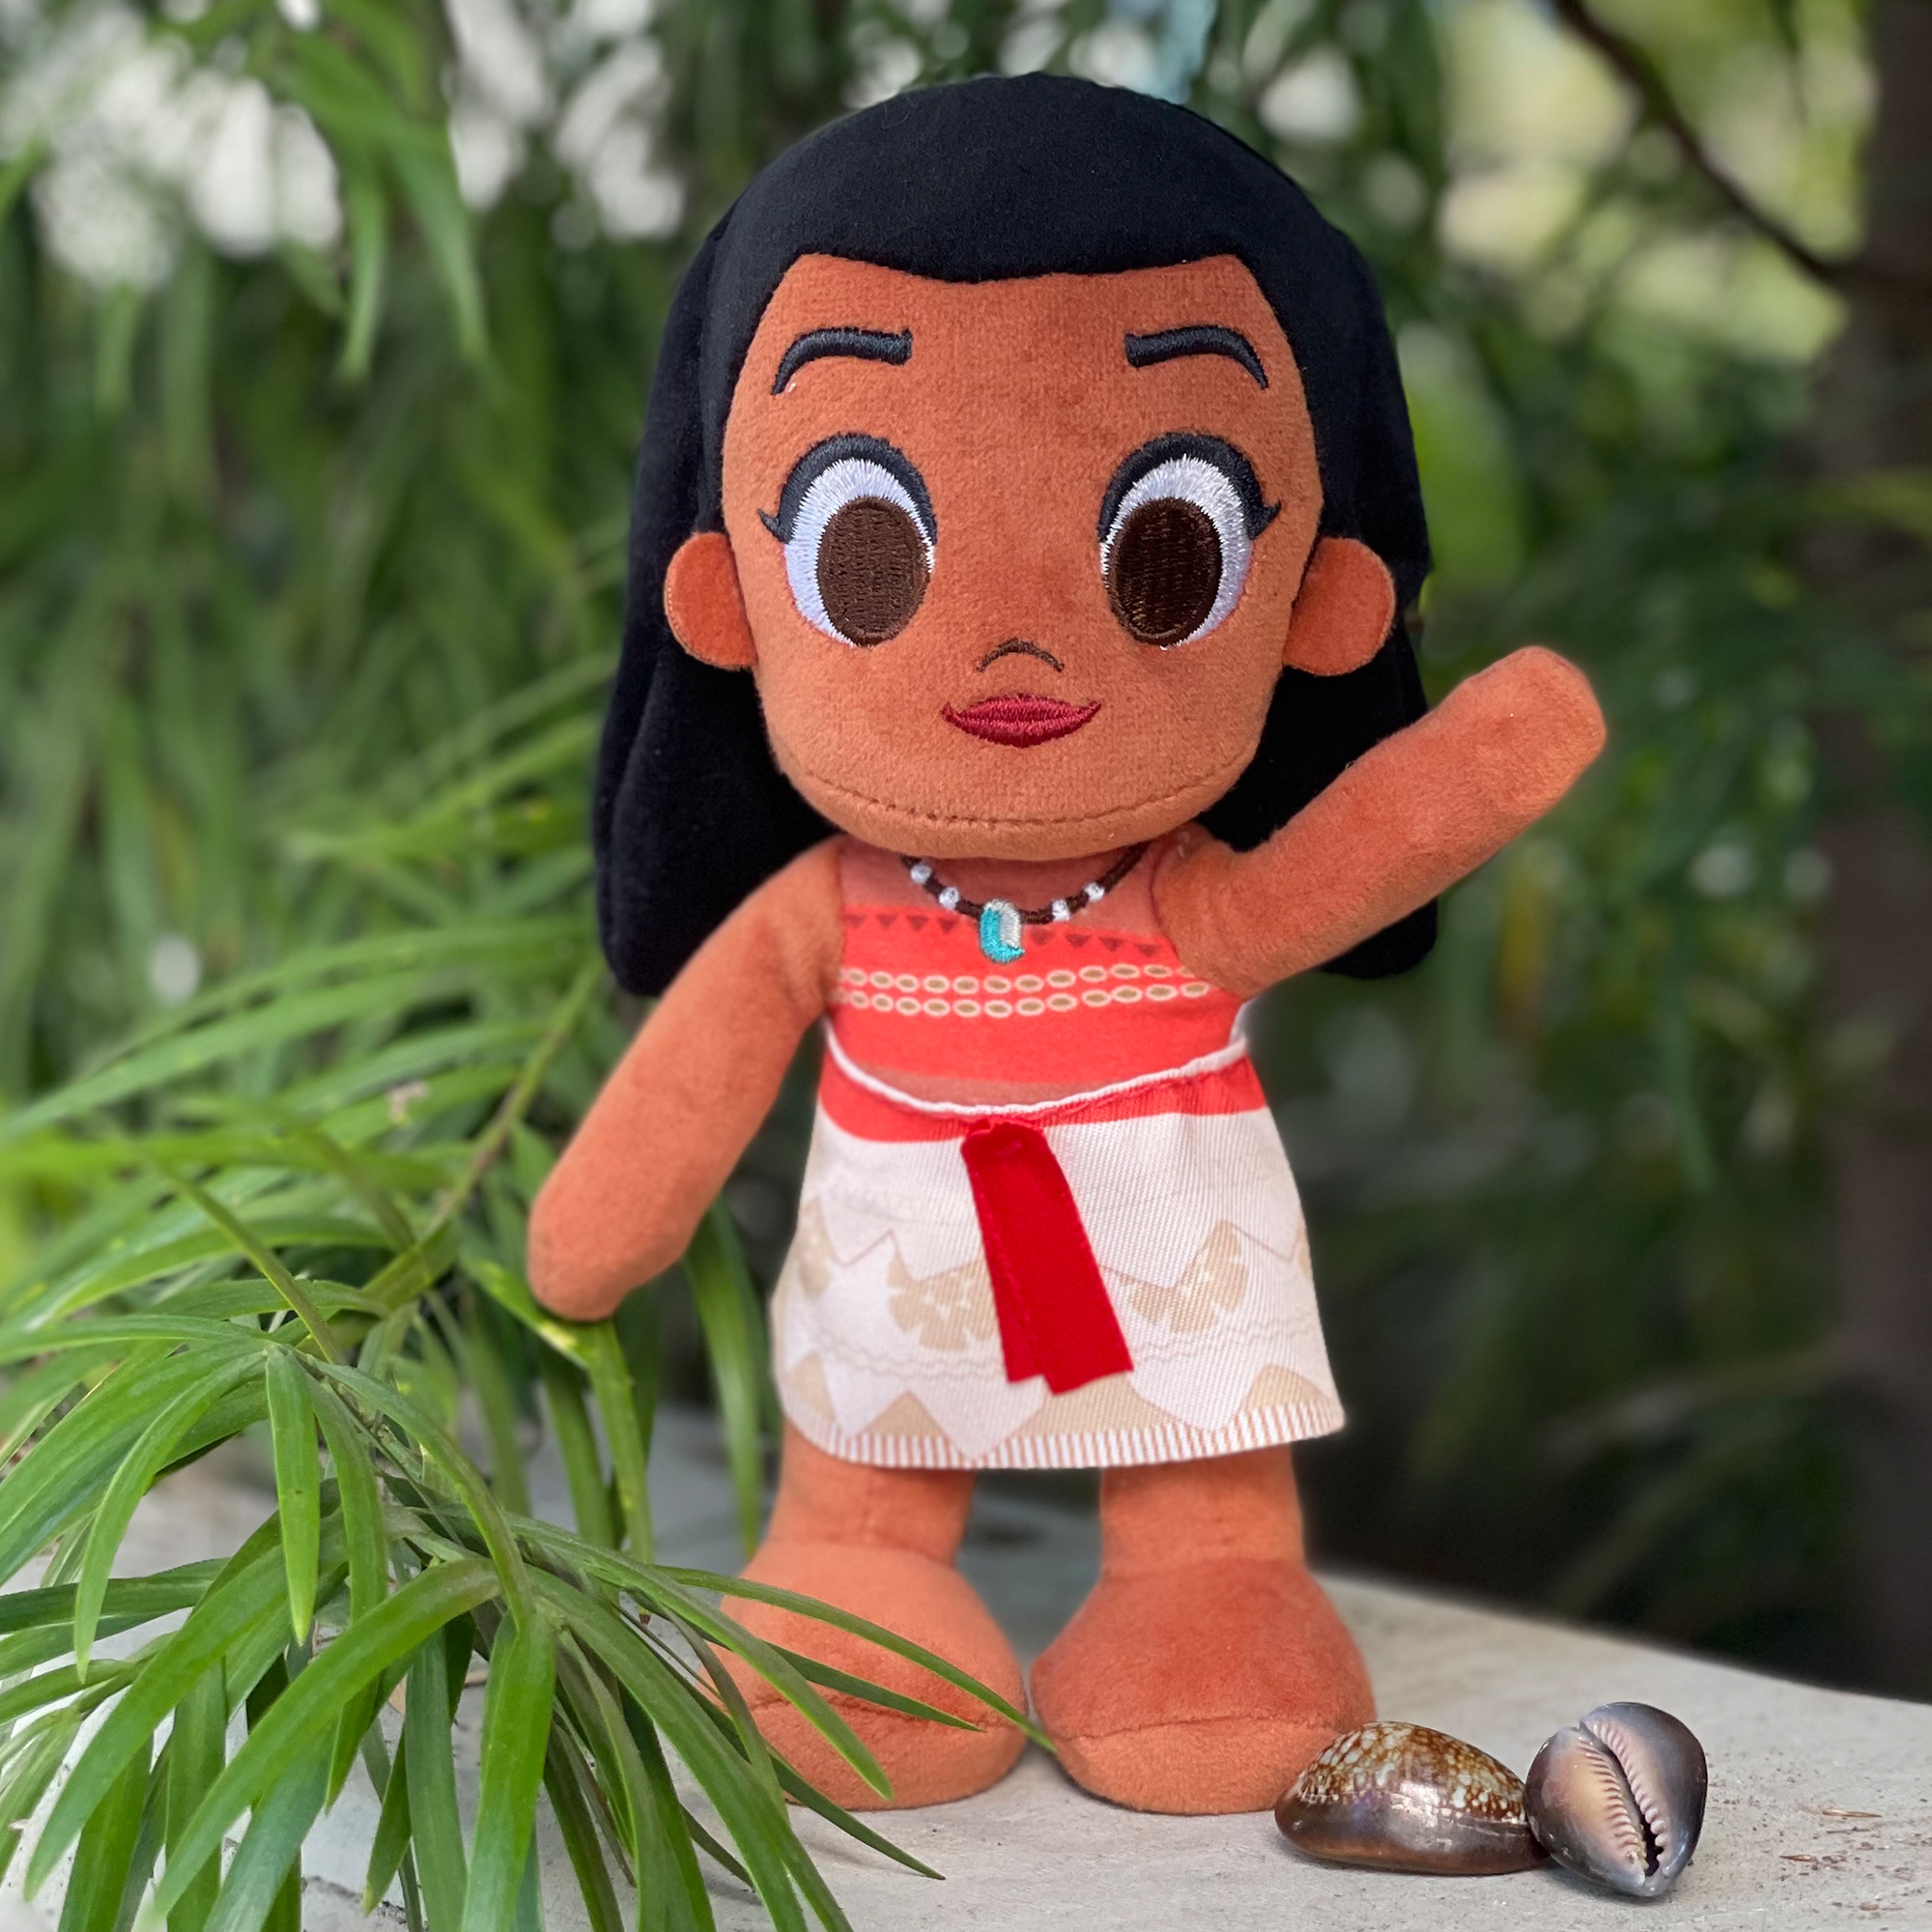 Disney Parks Moana nuiMOs Posable Plush Doll Toy